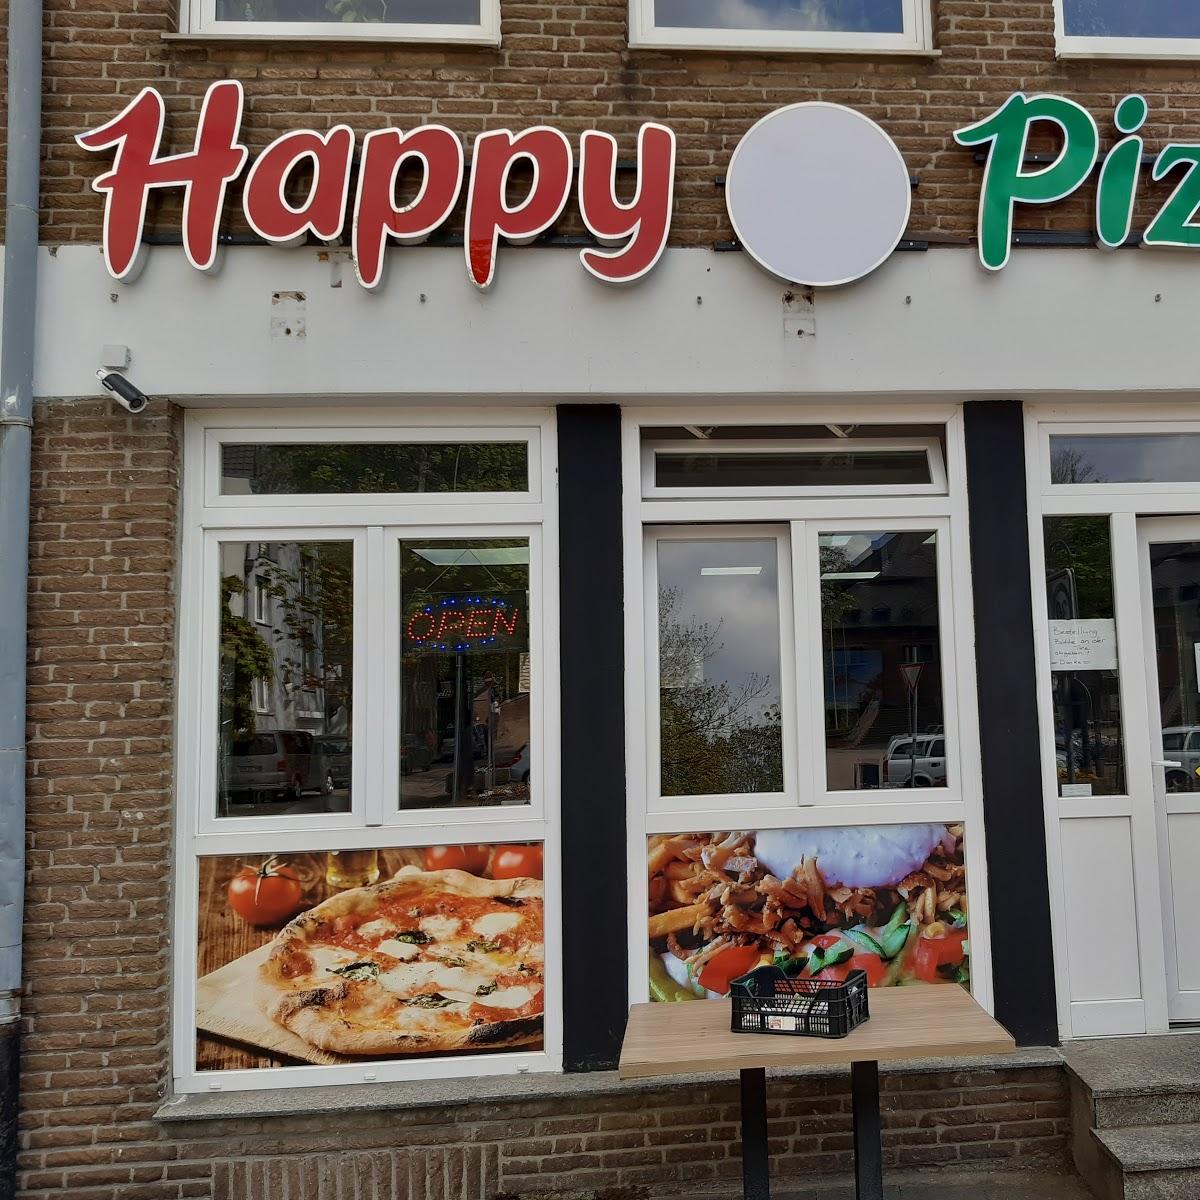 Restaurant "Happy Pizza Döner" in Grevenbroich